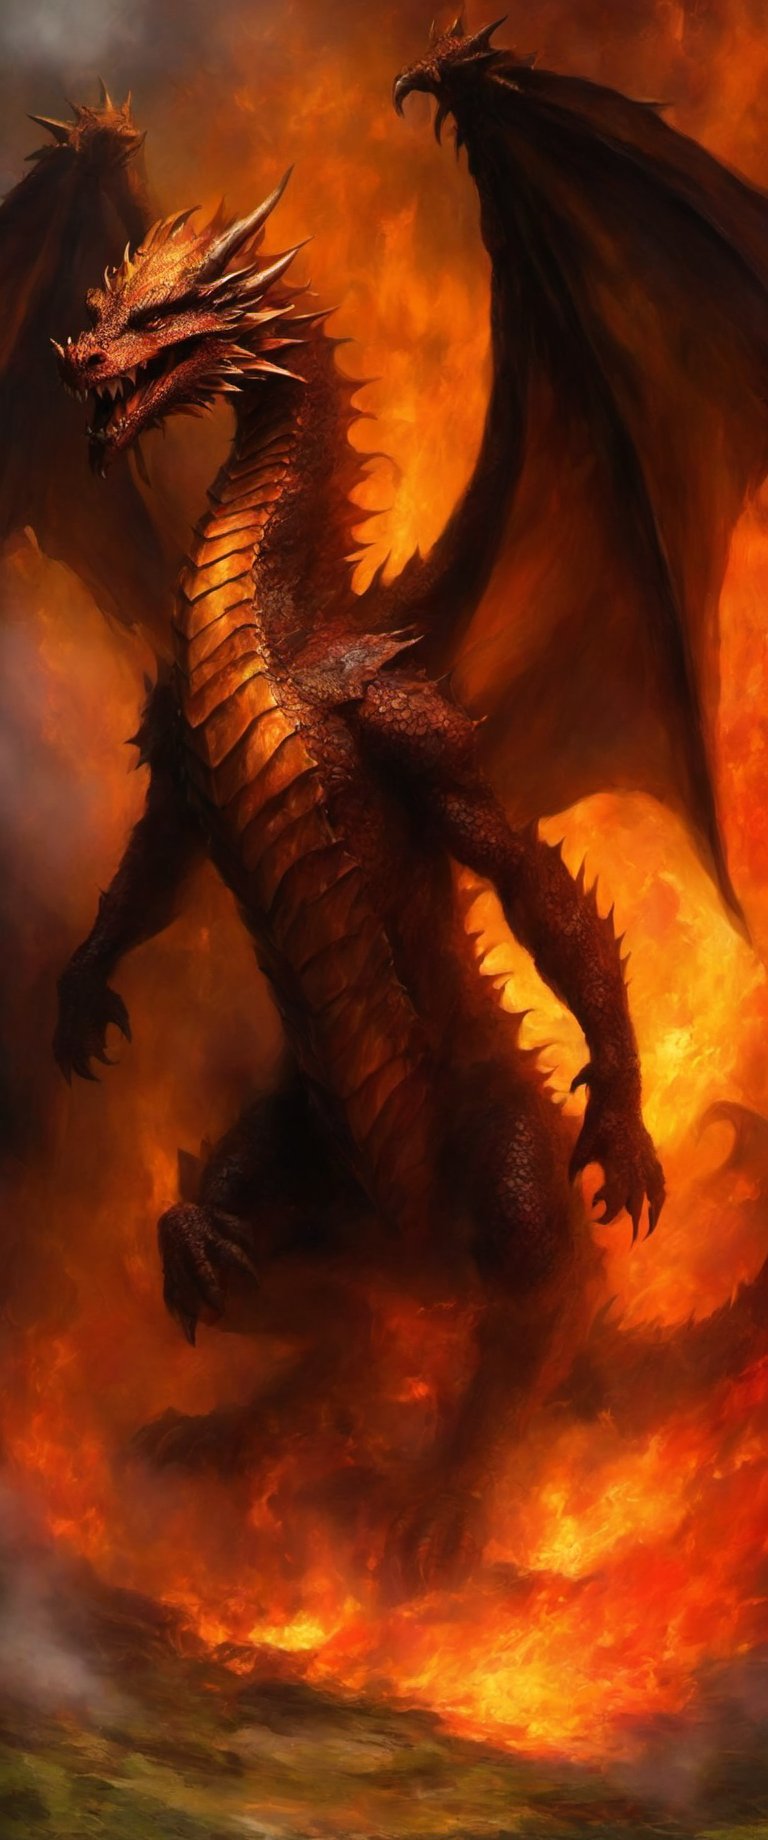 Deception of a medival  dragon slayer. dark, raw,oil paint